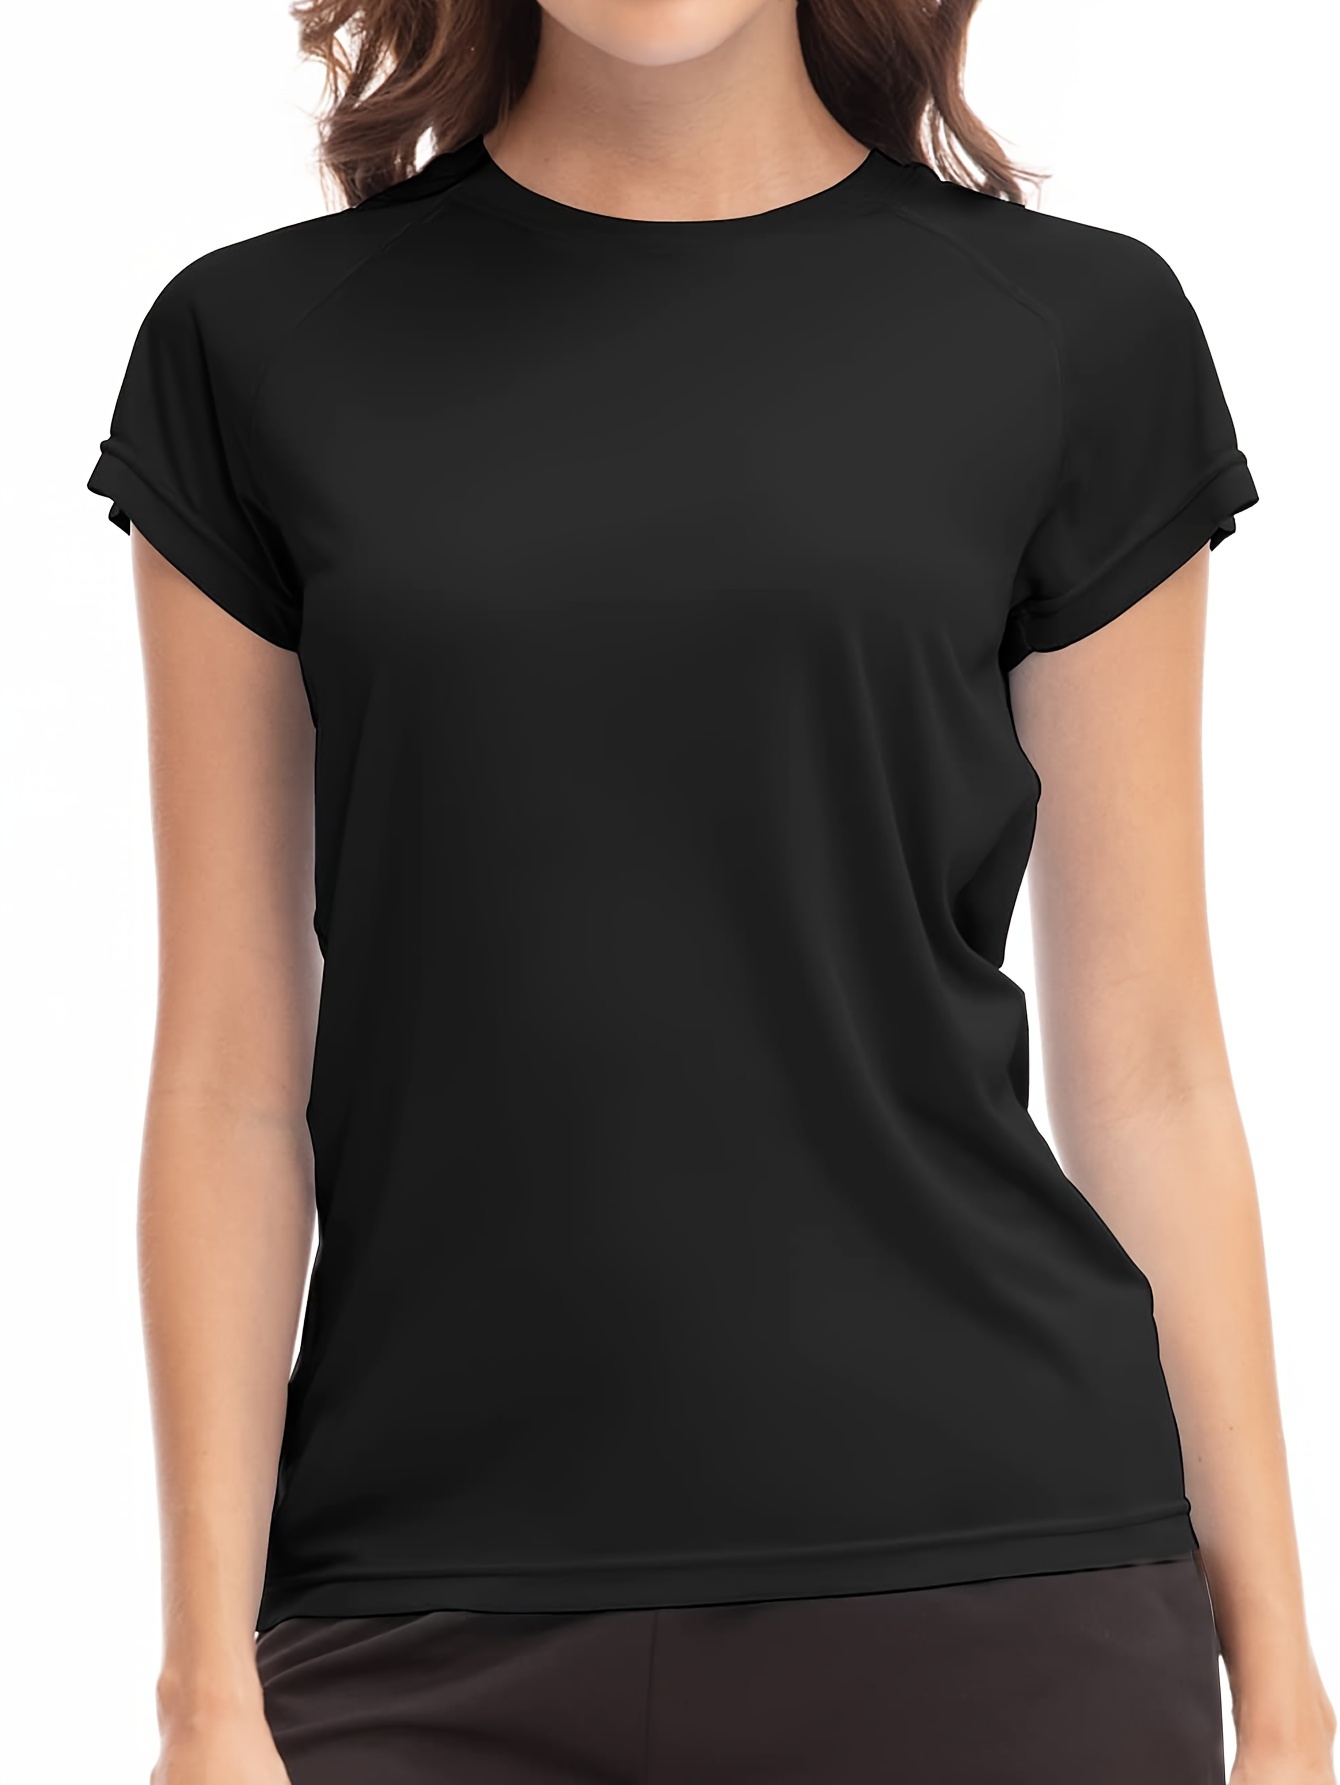 Camiseta deportiva manga corta Mujer - Minutoprint  Camisetas deportivas,  Poleras deportivas mujer, Ropa deportiva mujer